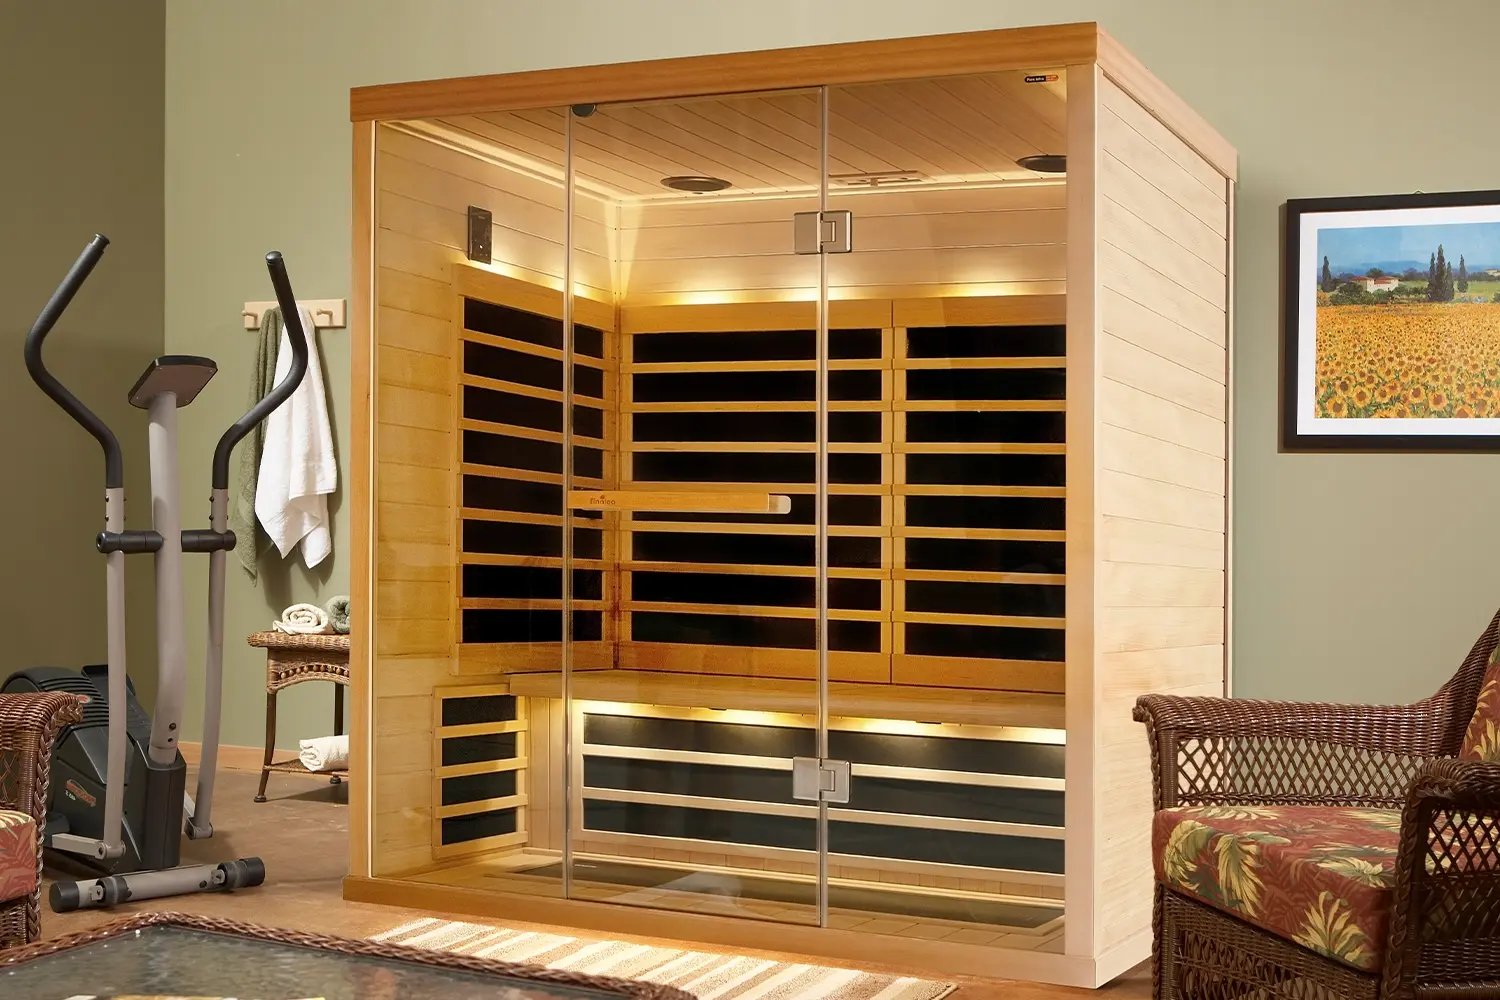 S-Series: Freestanding Portable Saunas